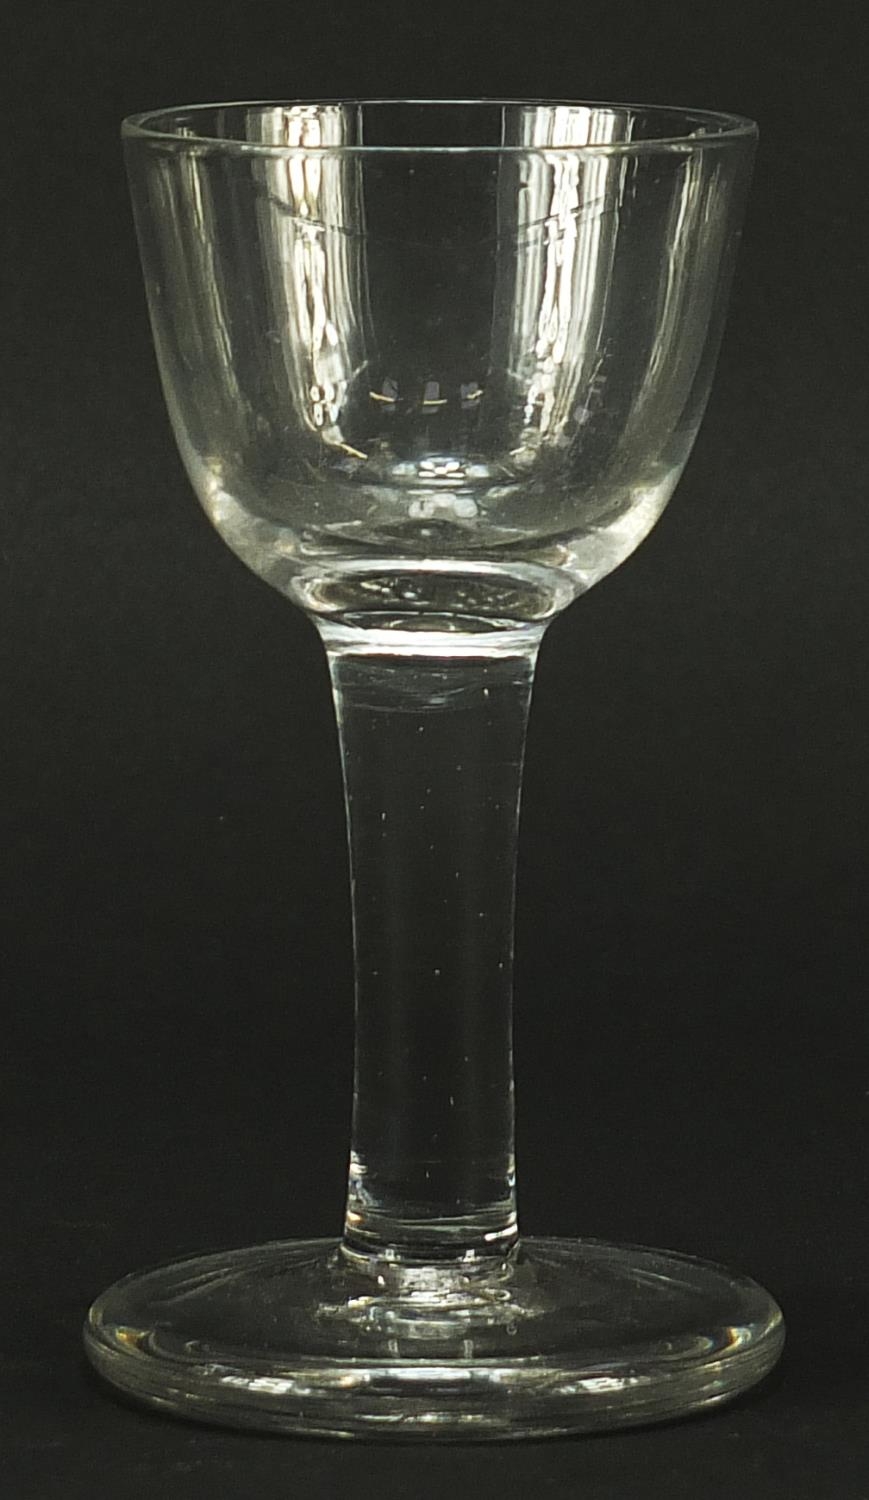 18th century wine glass, 13cm high - Image 2 of 3